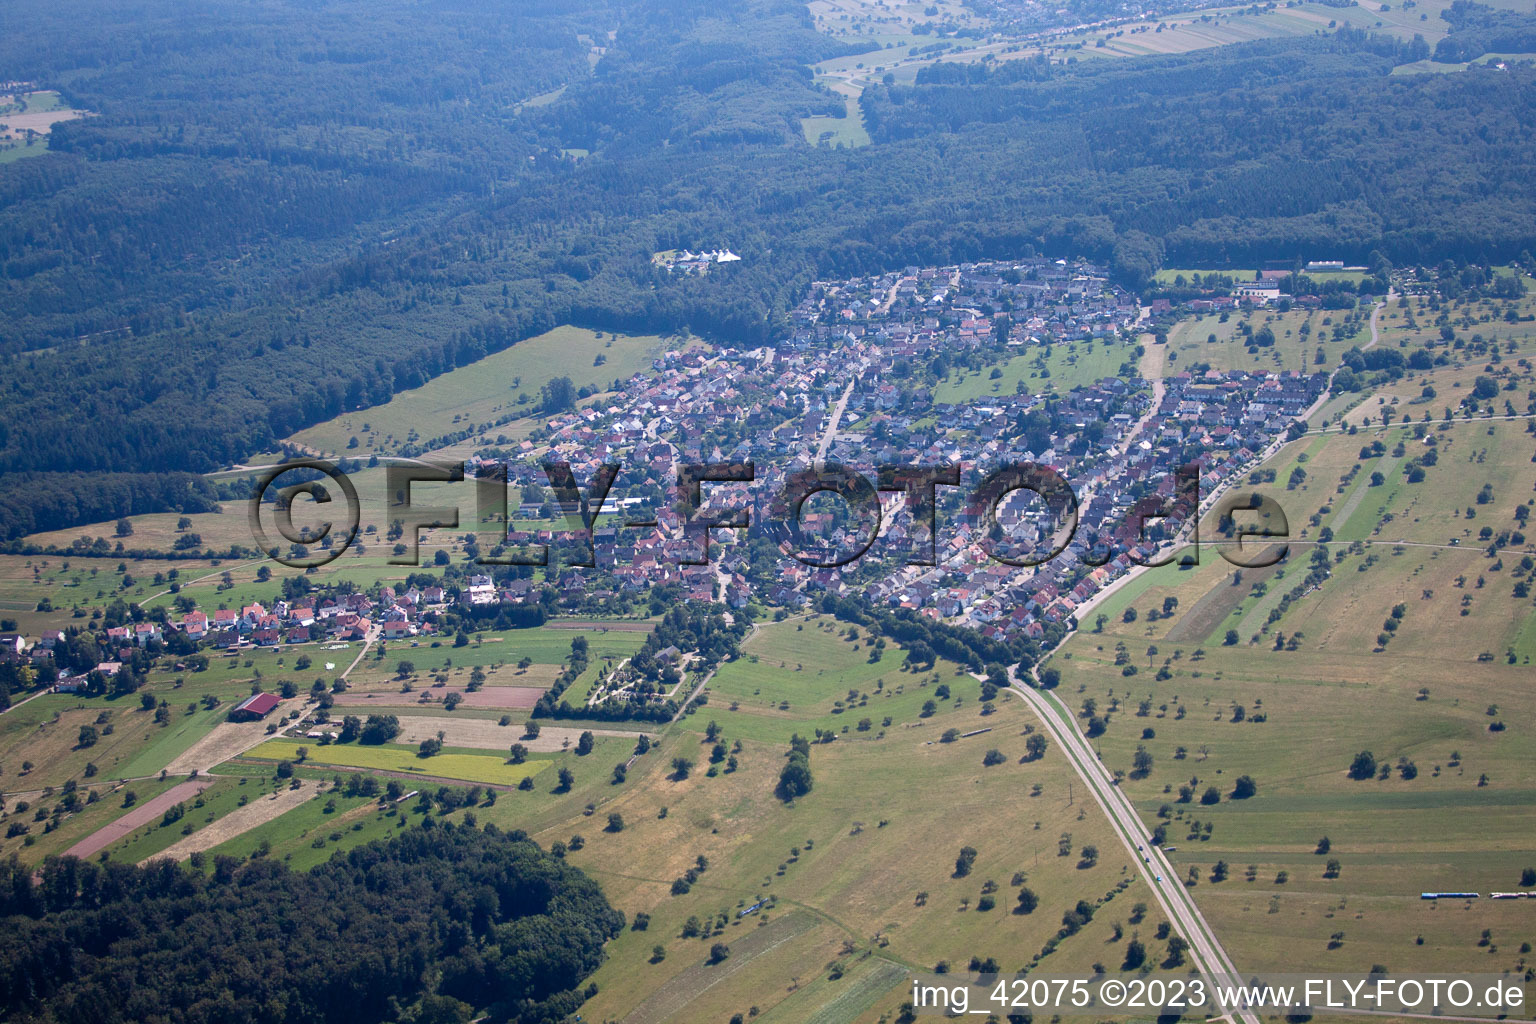 District Schöllbronn in Ettlingen in the state Baden-Wuerttemberg, Germany from the plane